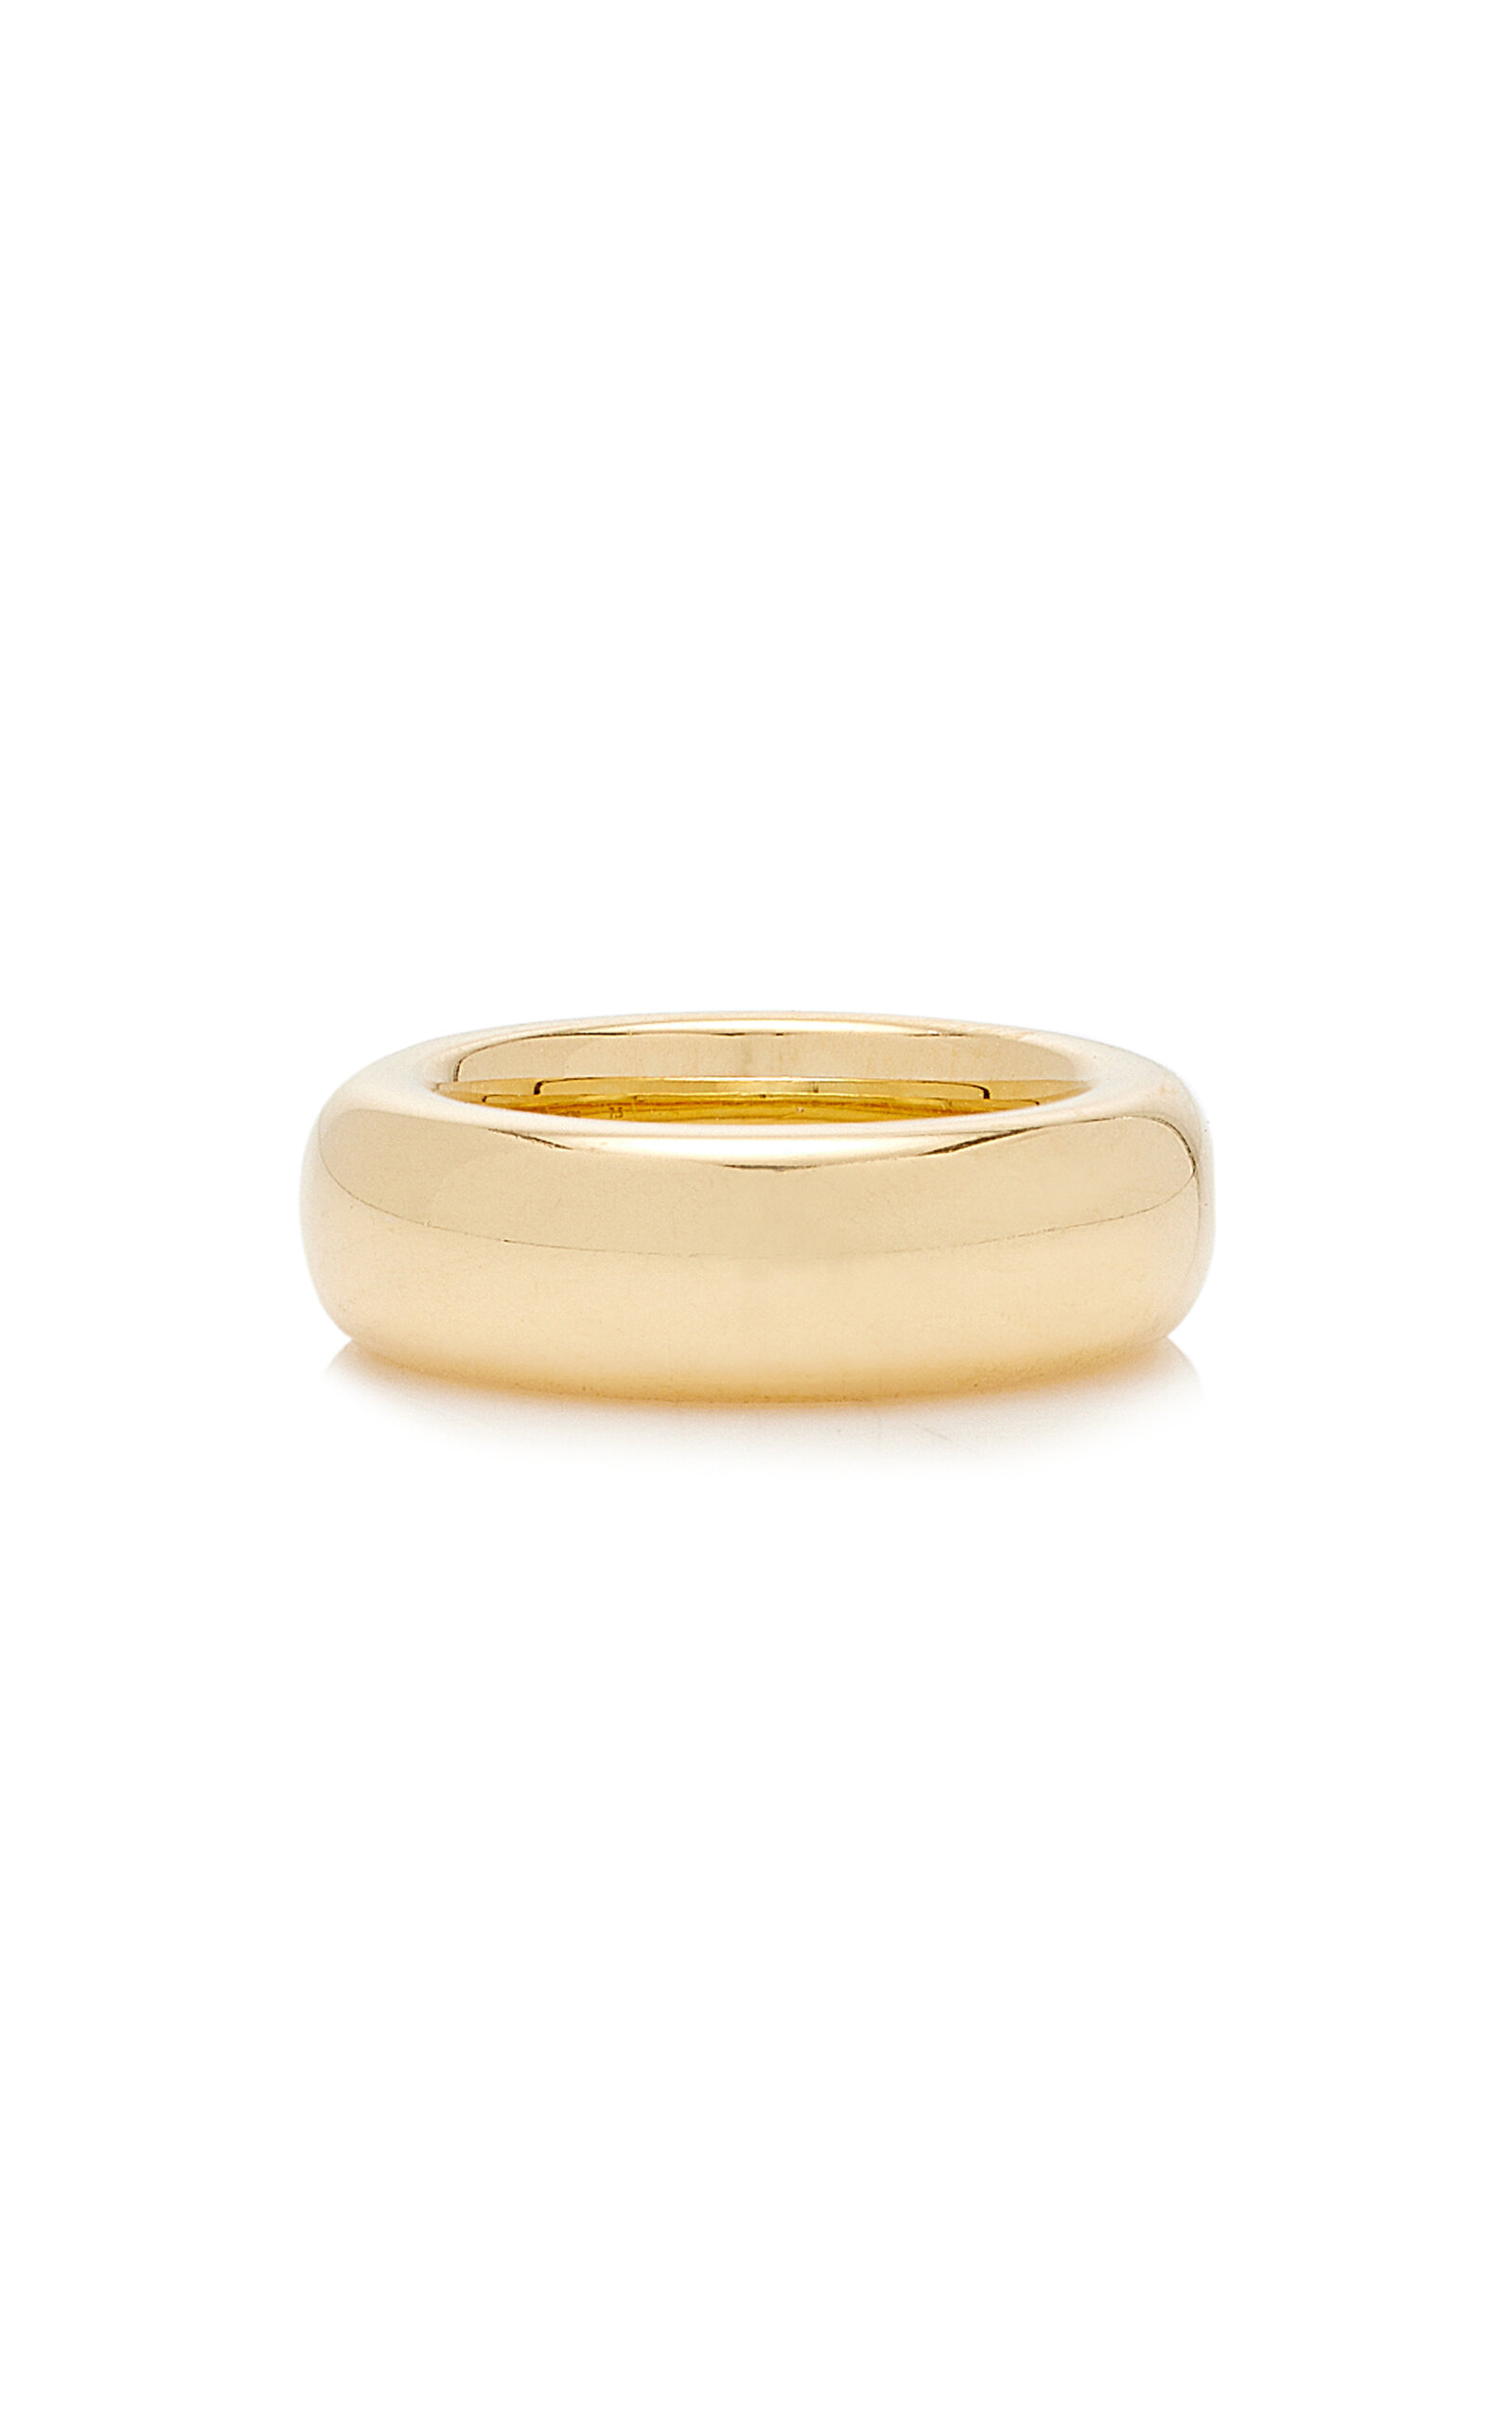 Briony Raymond Women's Sloan 18K Yellow Gold Ring